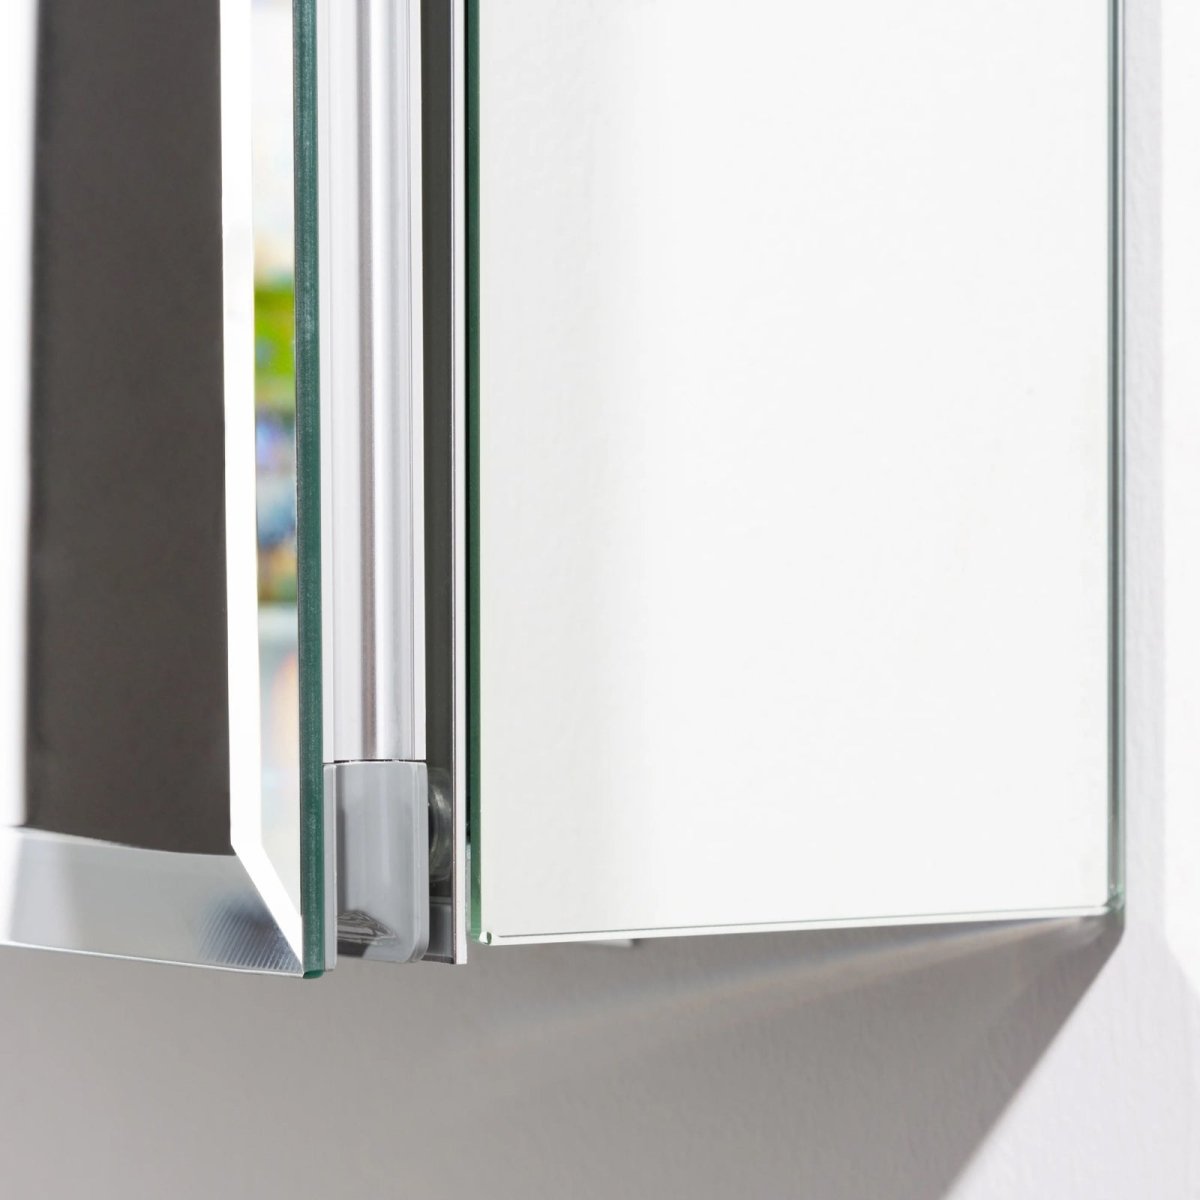 Brushed Aluminum - Real Aluminum Surface Cabinet Doors